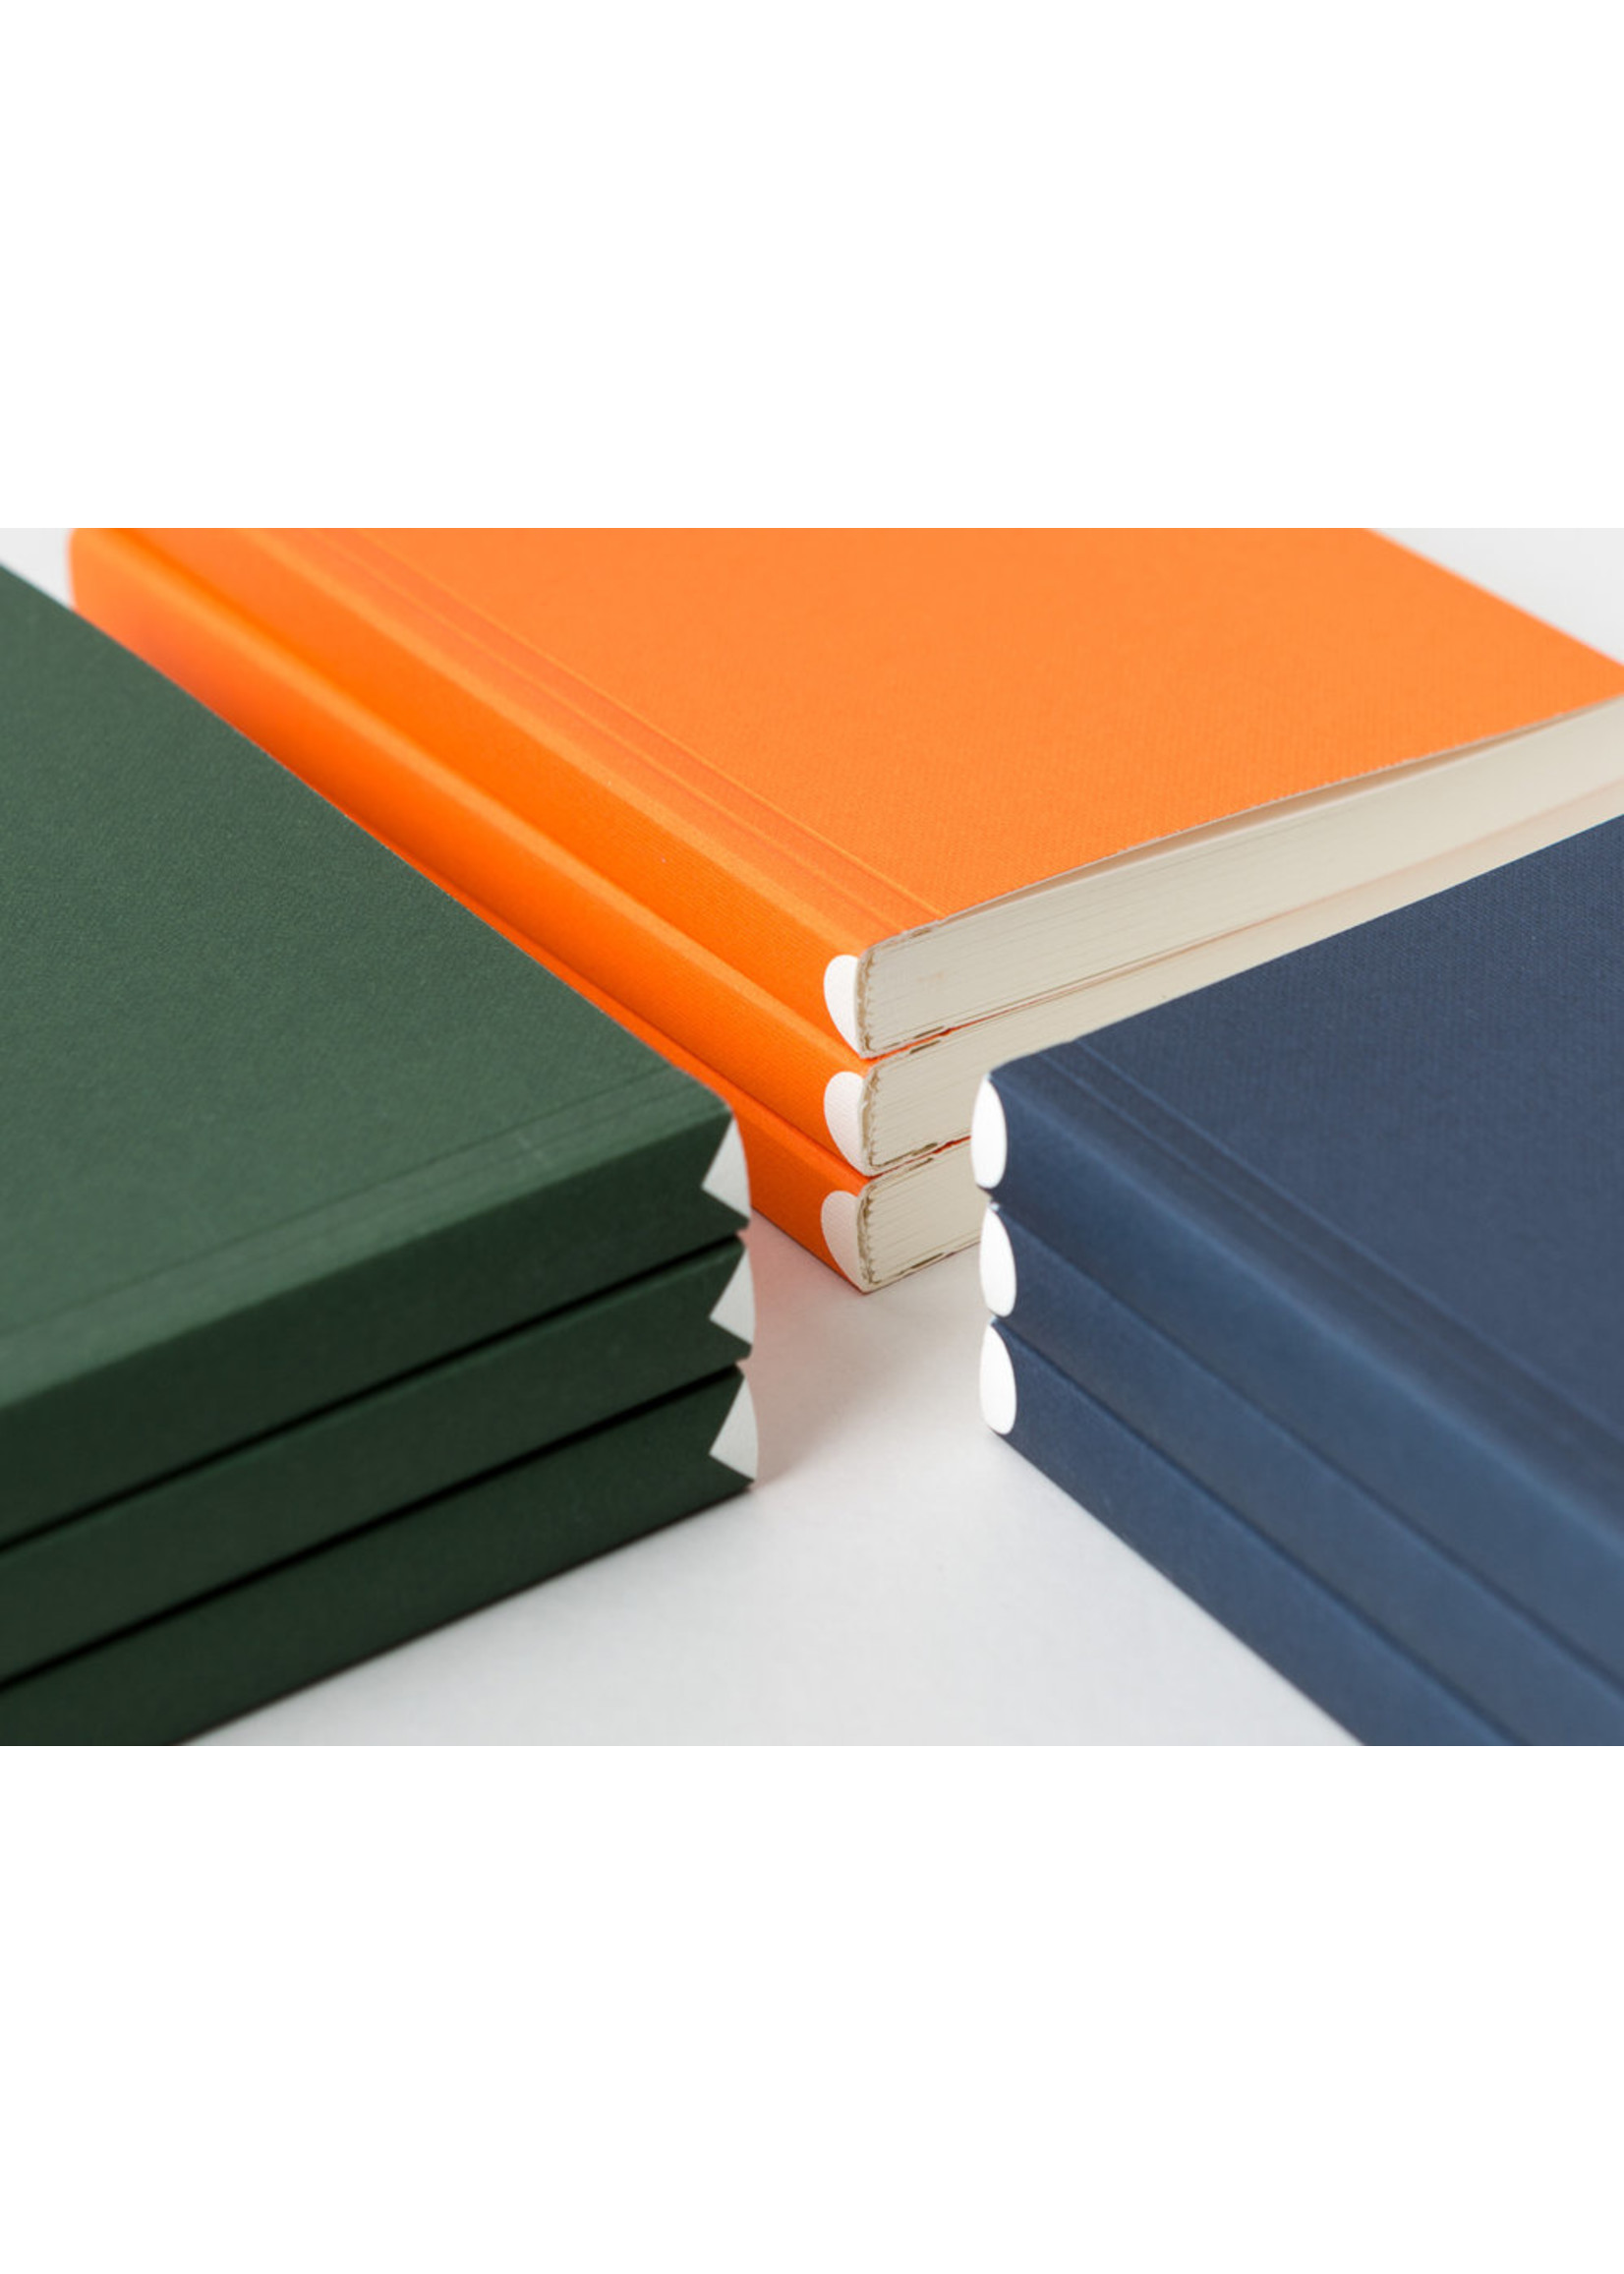 Ola Ola Medium Layflat Notebook: Everyday Objects Edition 1: Circle Navy/Plain